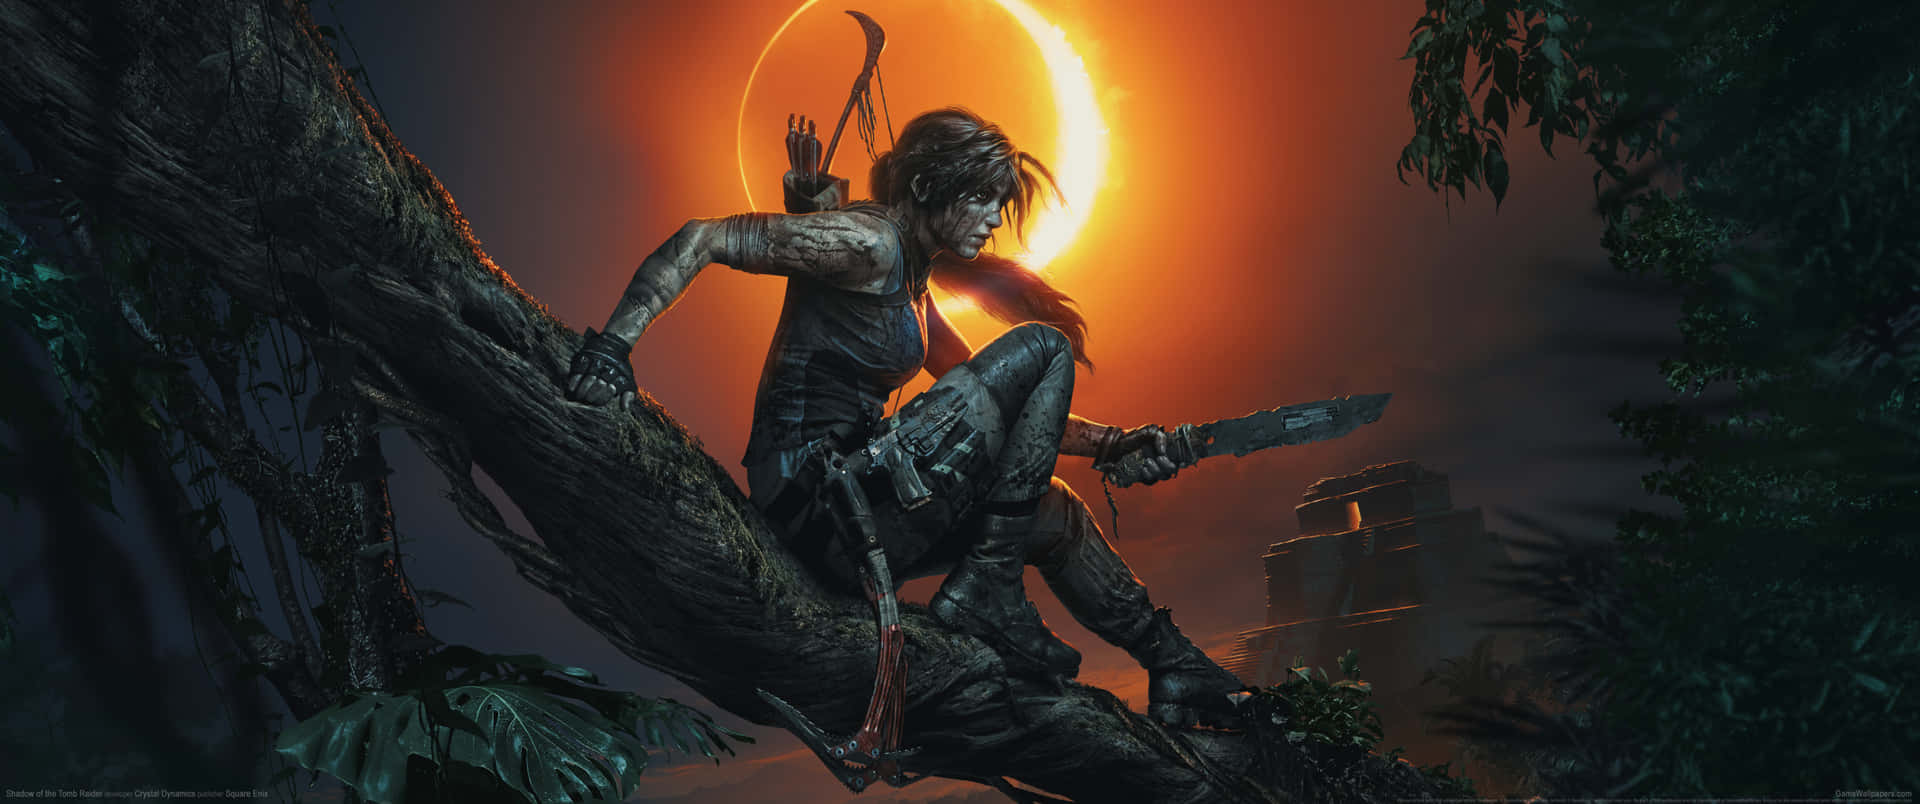 Digital Artwork 4k Shadow Of The Tomb Raider Background For Desktop